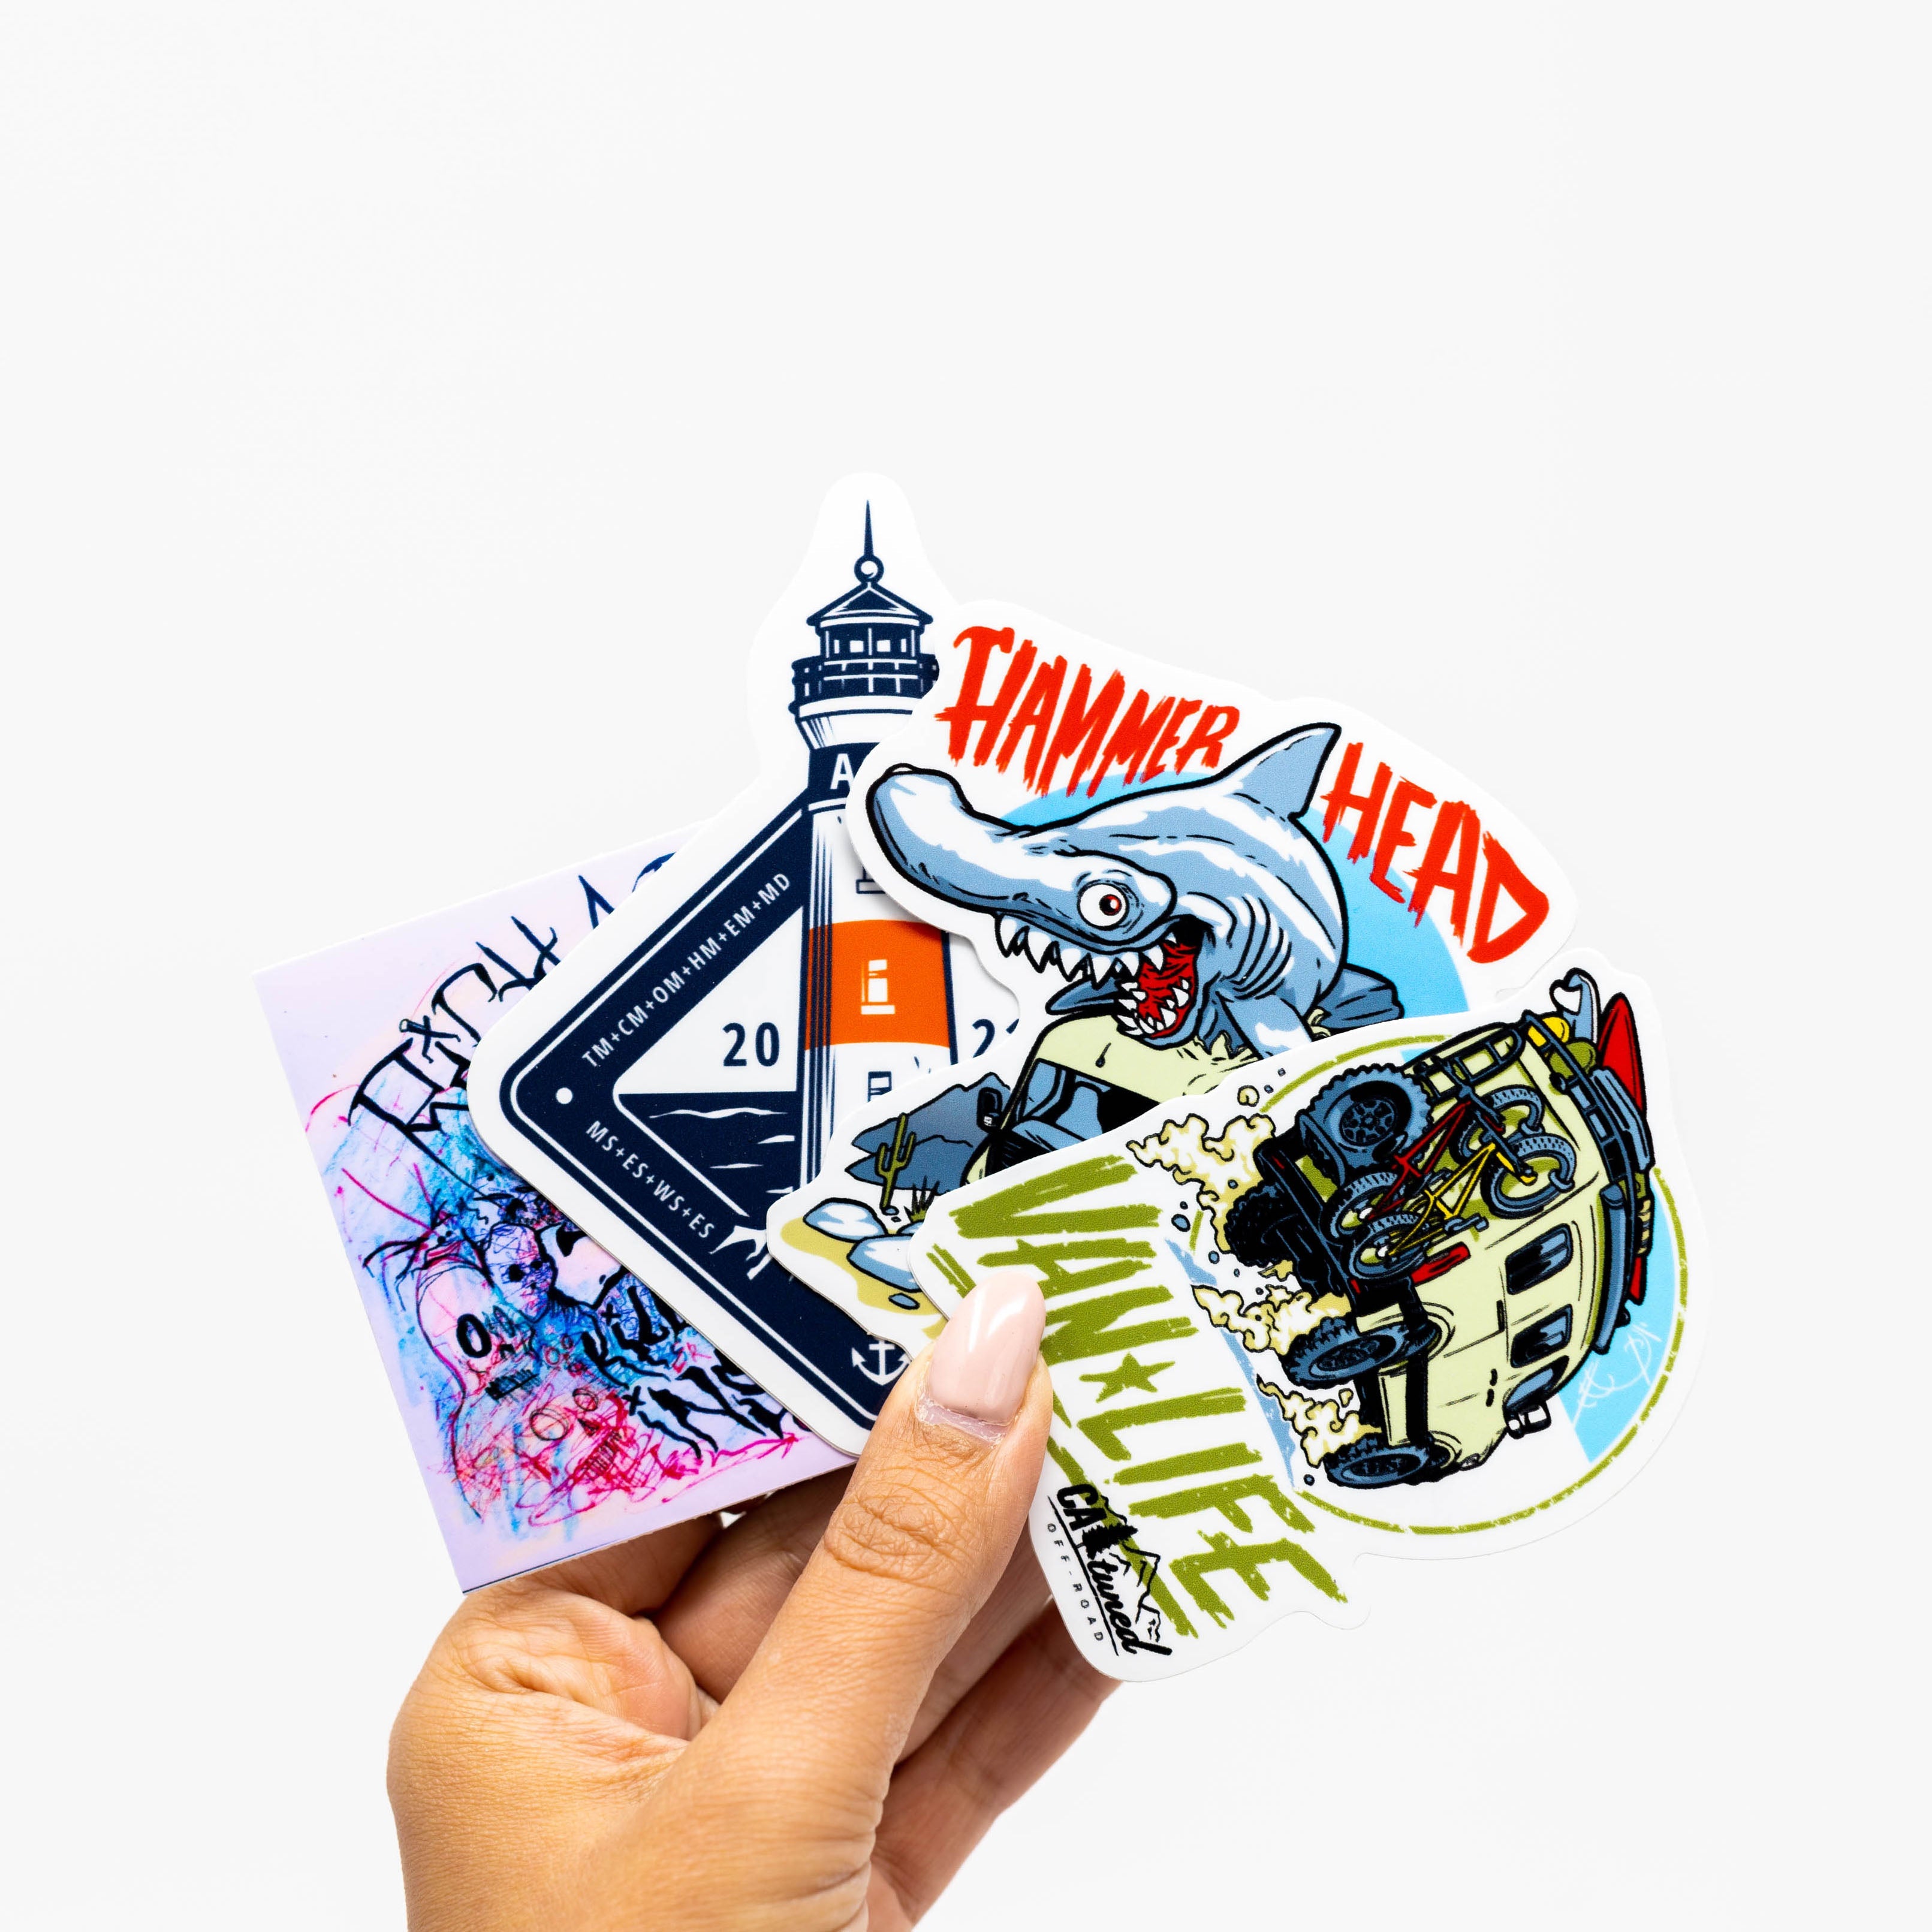 Custom Vinyl Stickers - Sticky Brand